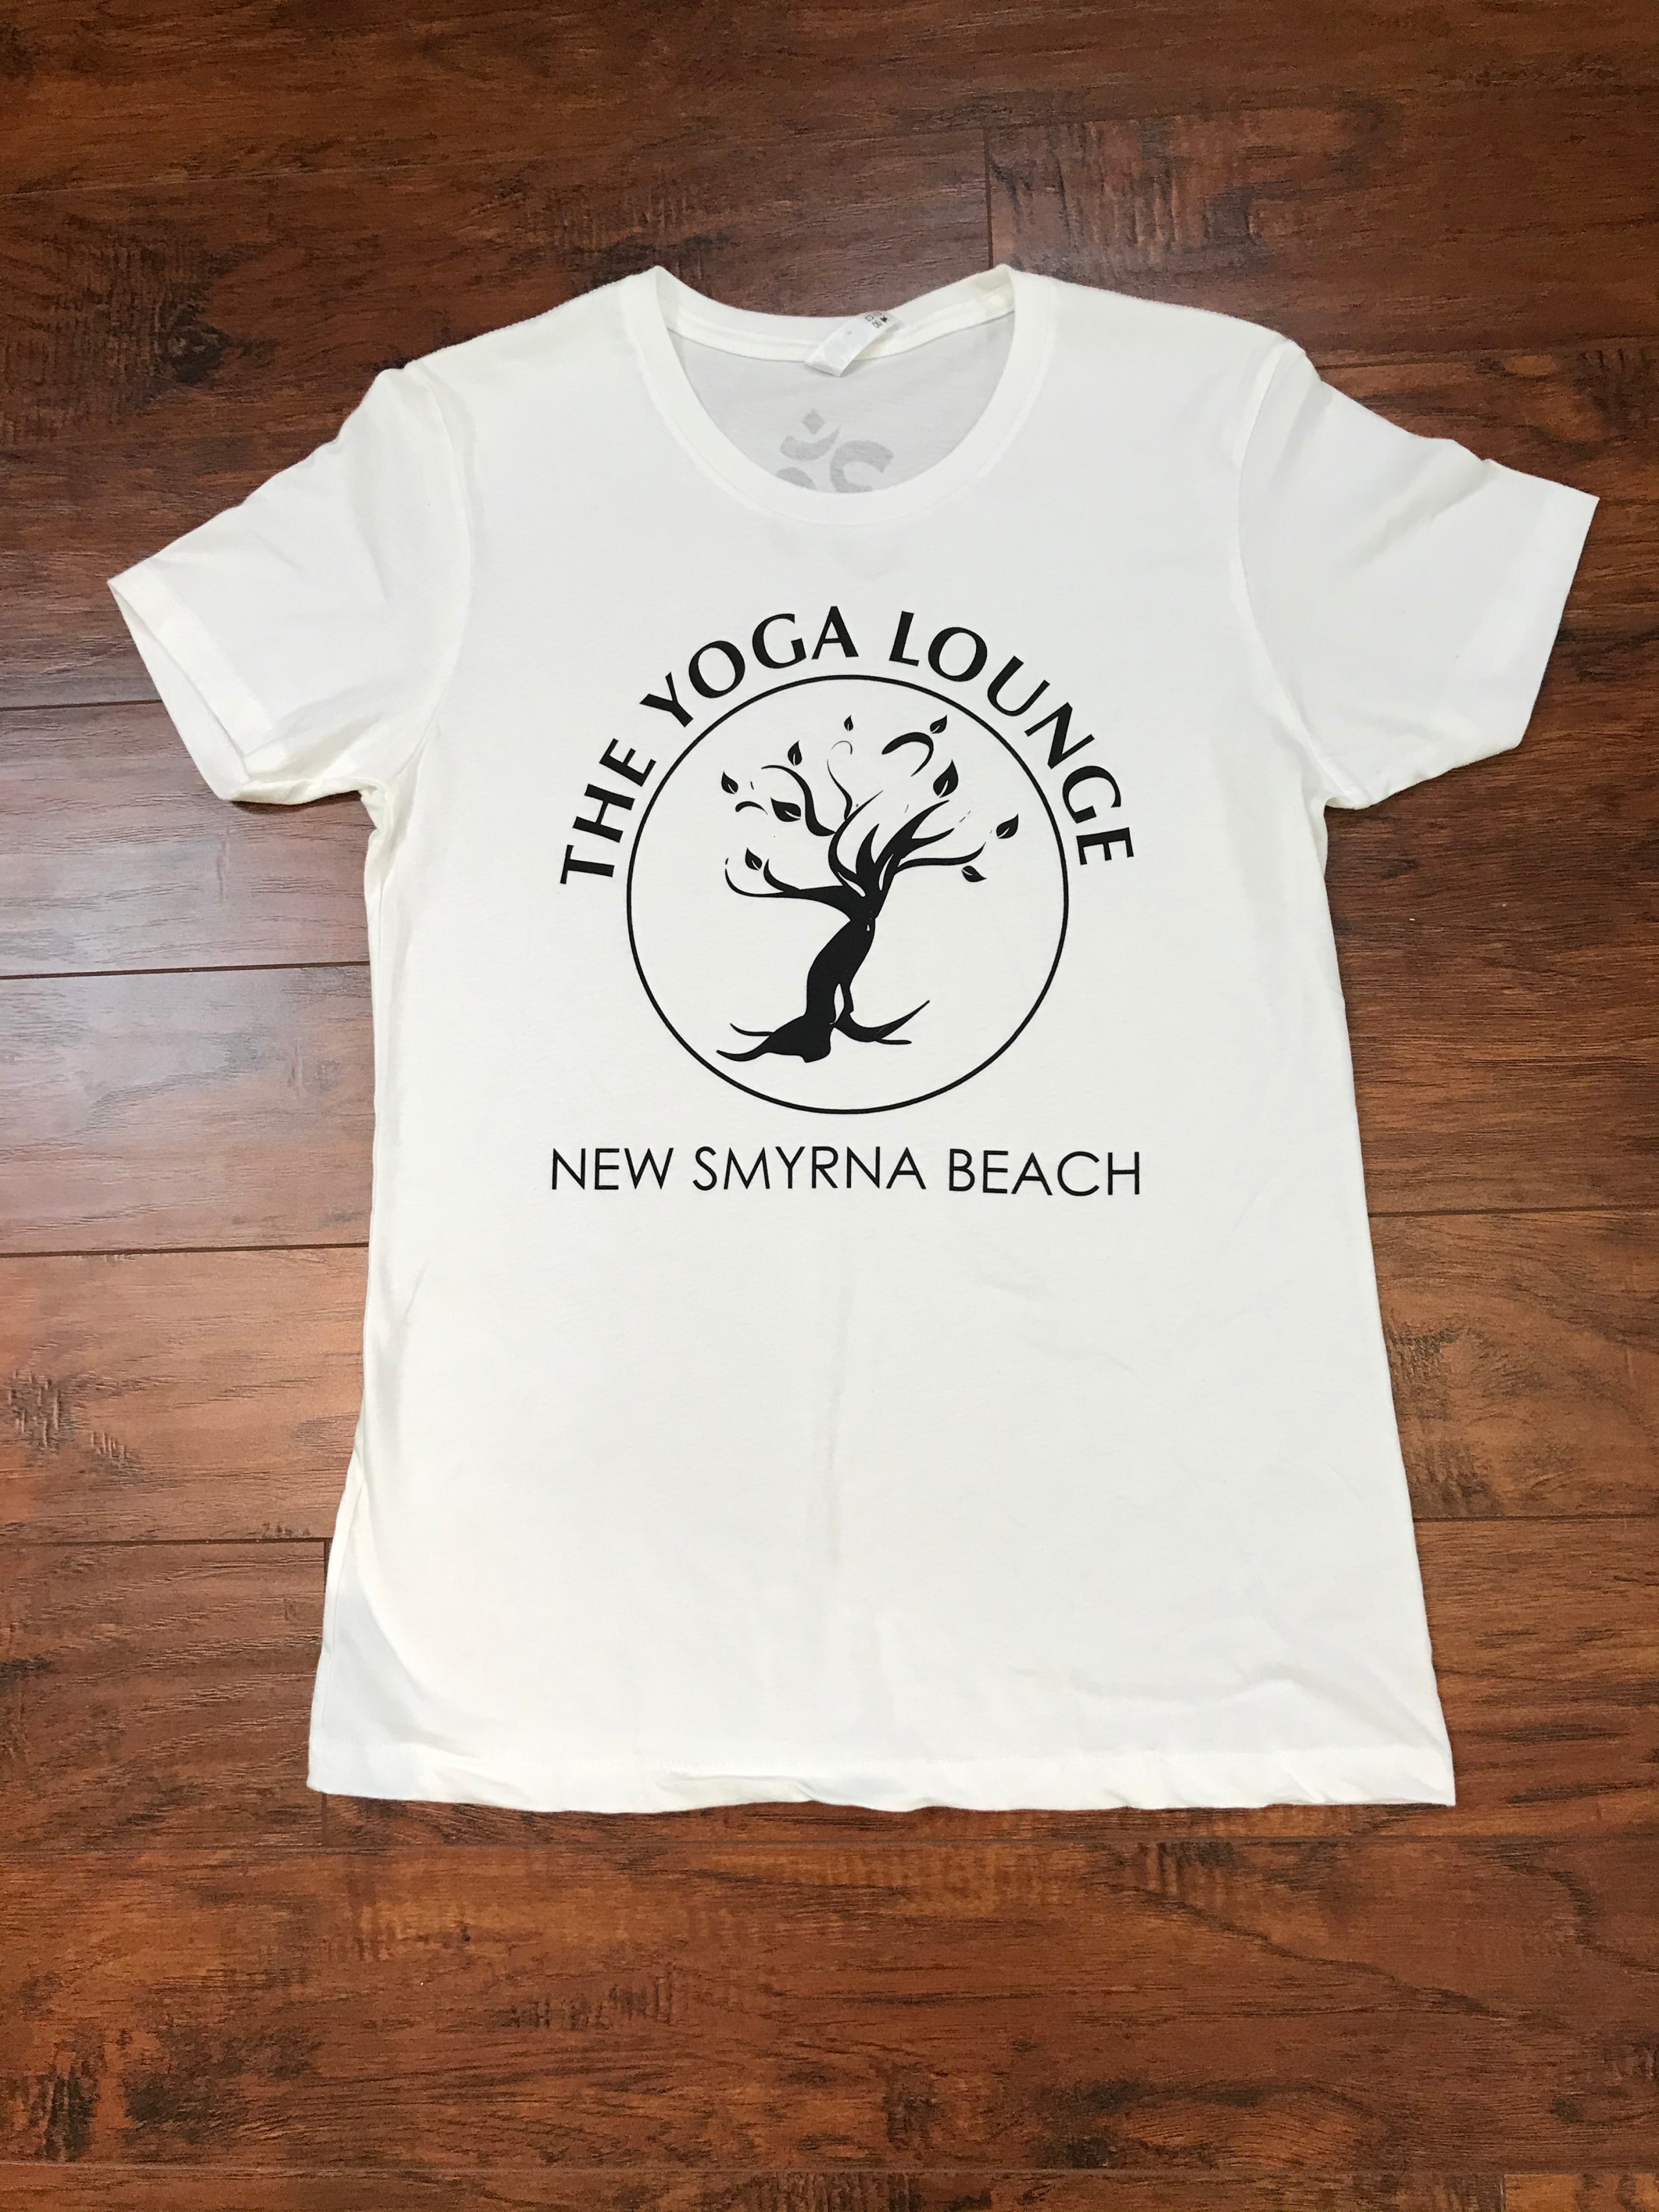 The Yoga Lounge T-Shirt